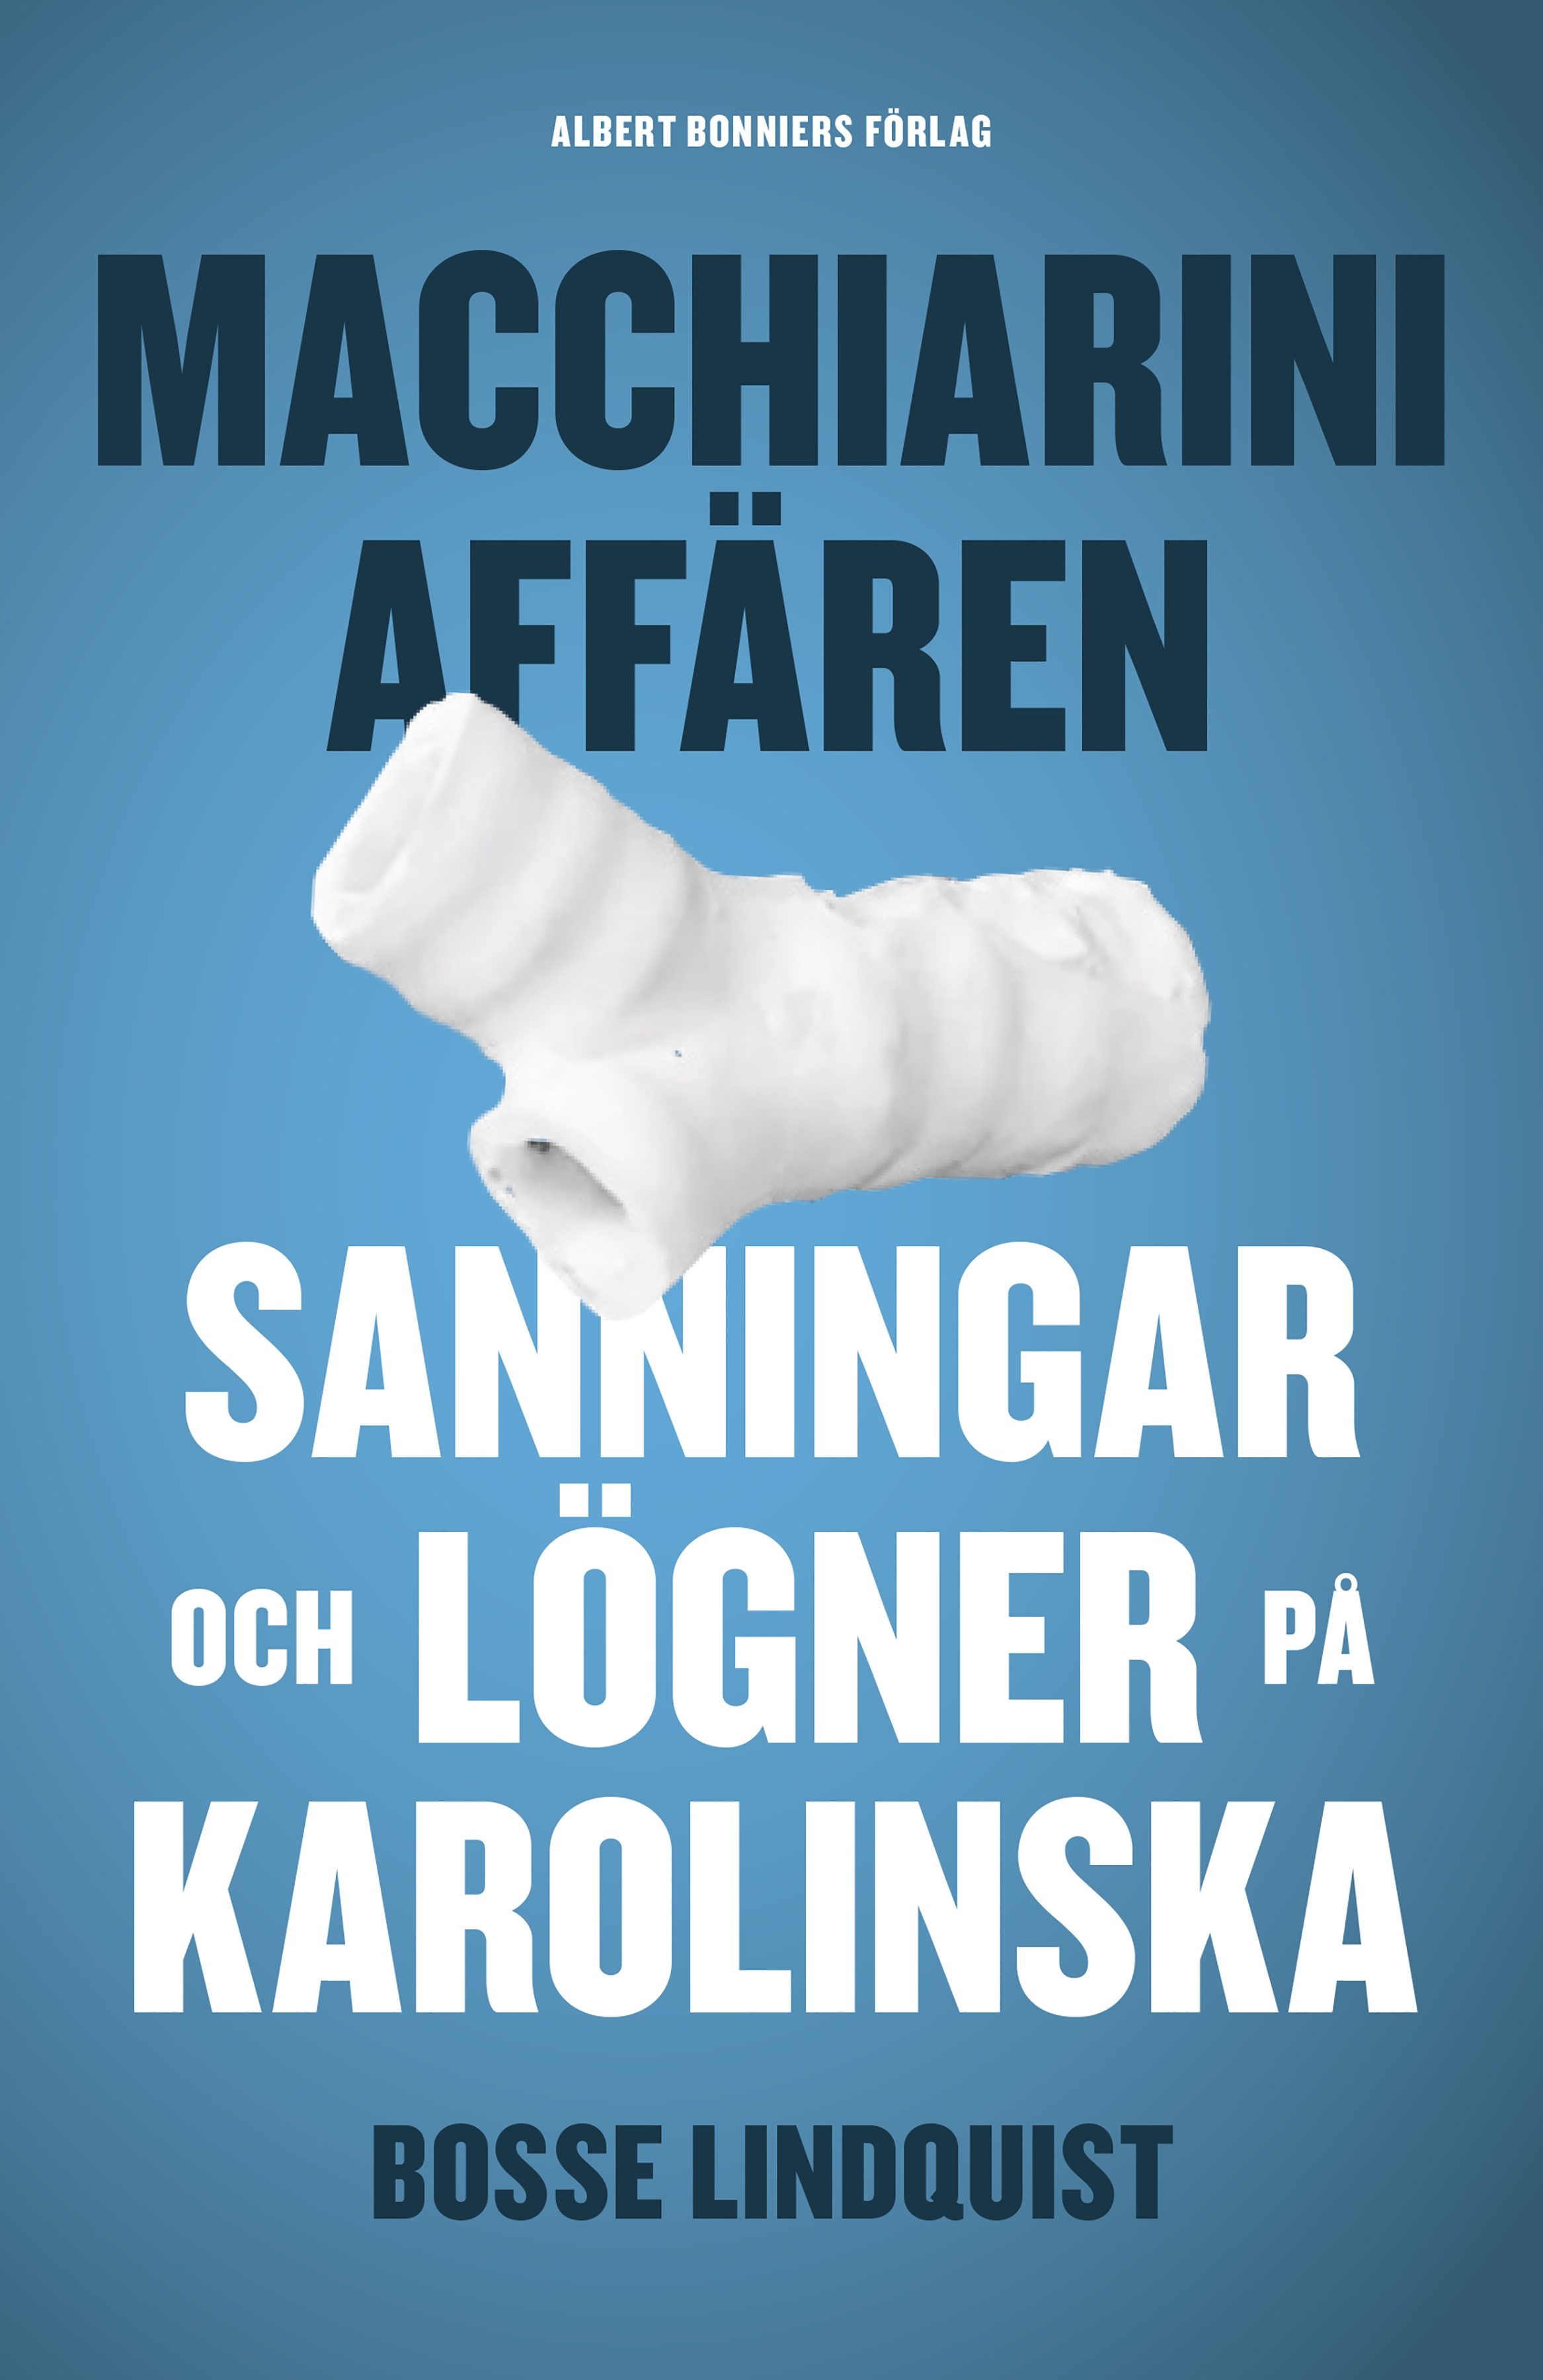 Bosse Lindquist: Macchiariniaffären (EBook, swedish language, 2018, Albert Bonniers Förlag)